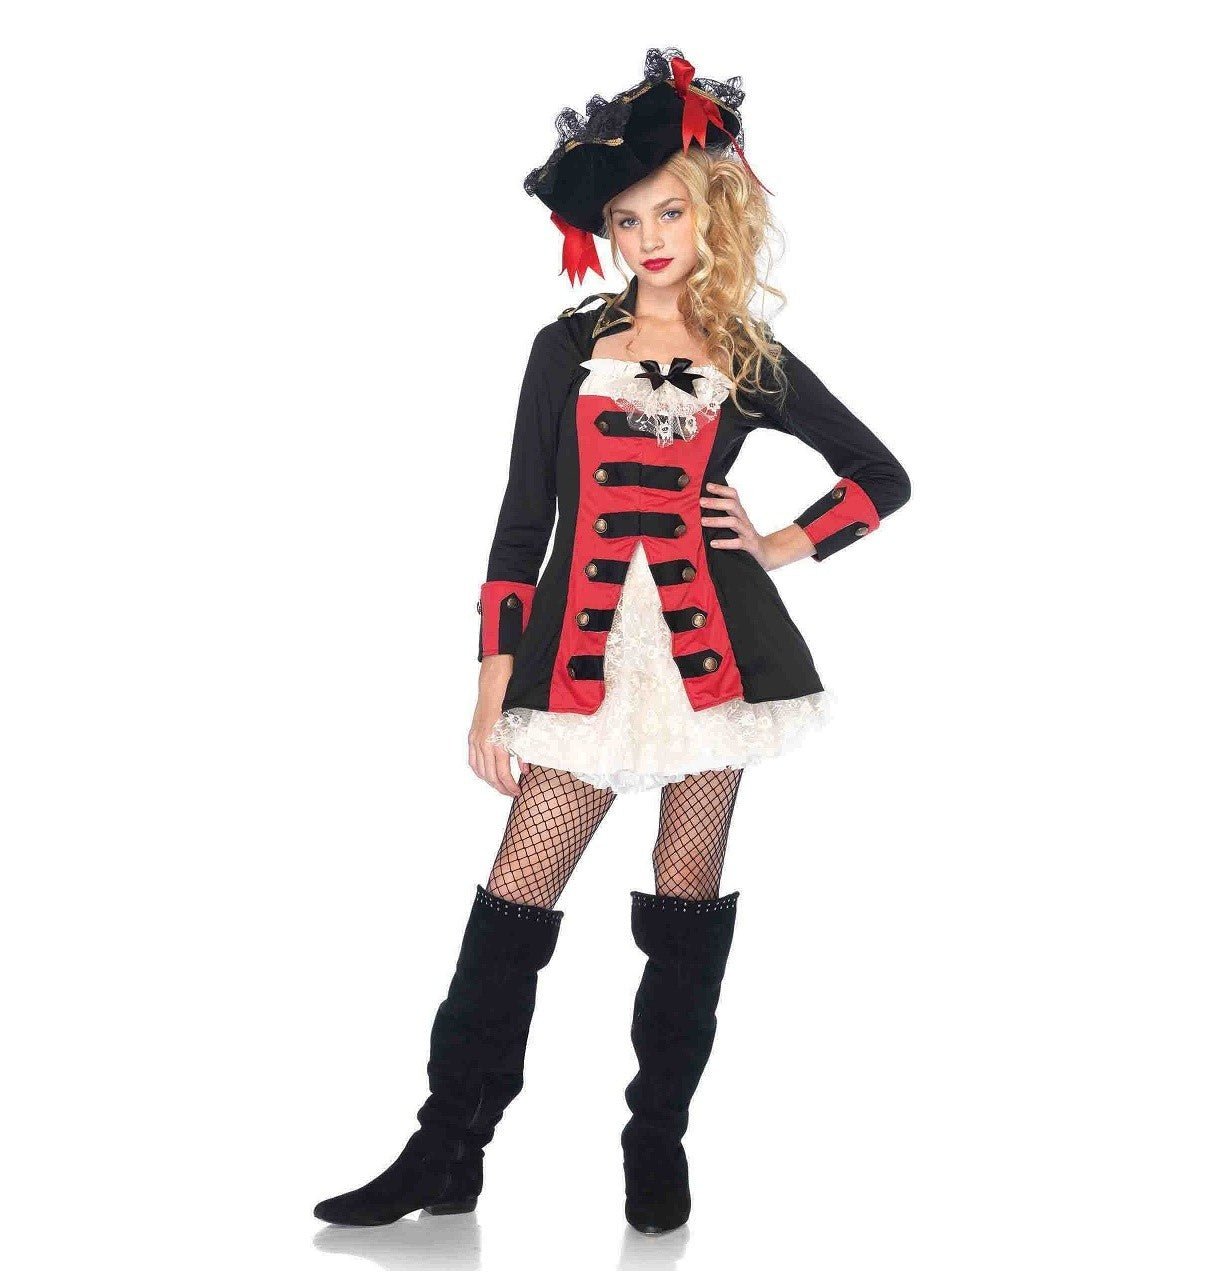 Costume Adolescente - Jolie Capitaine Pirate Party Shop